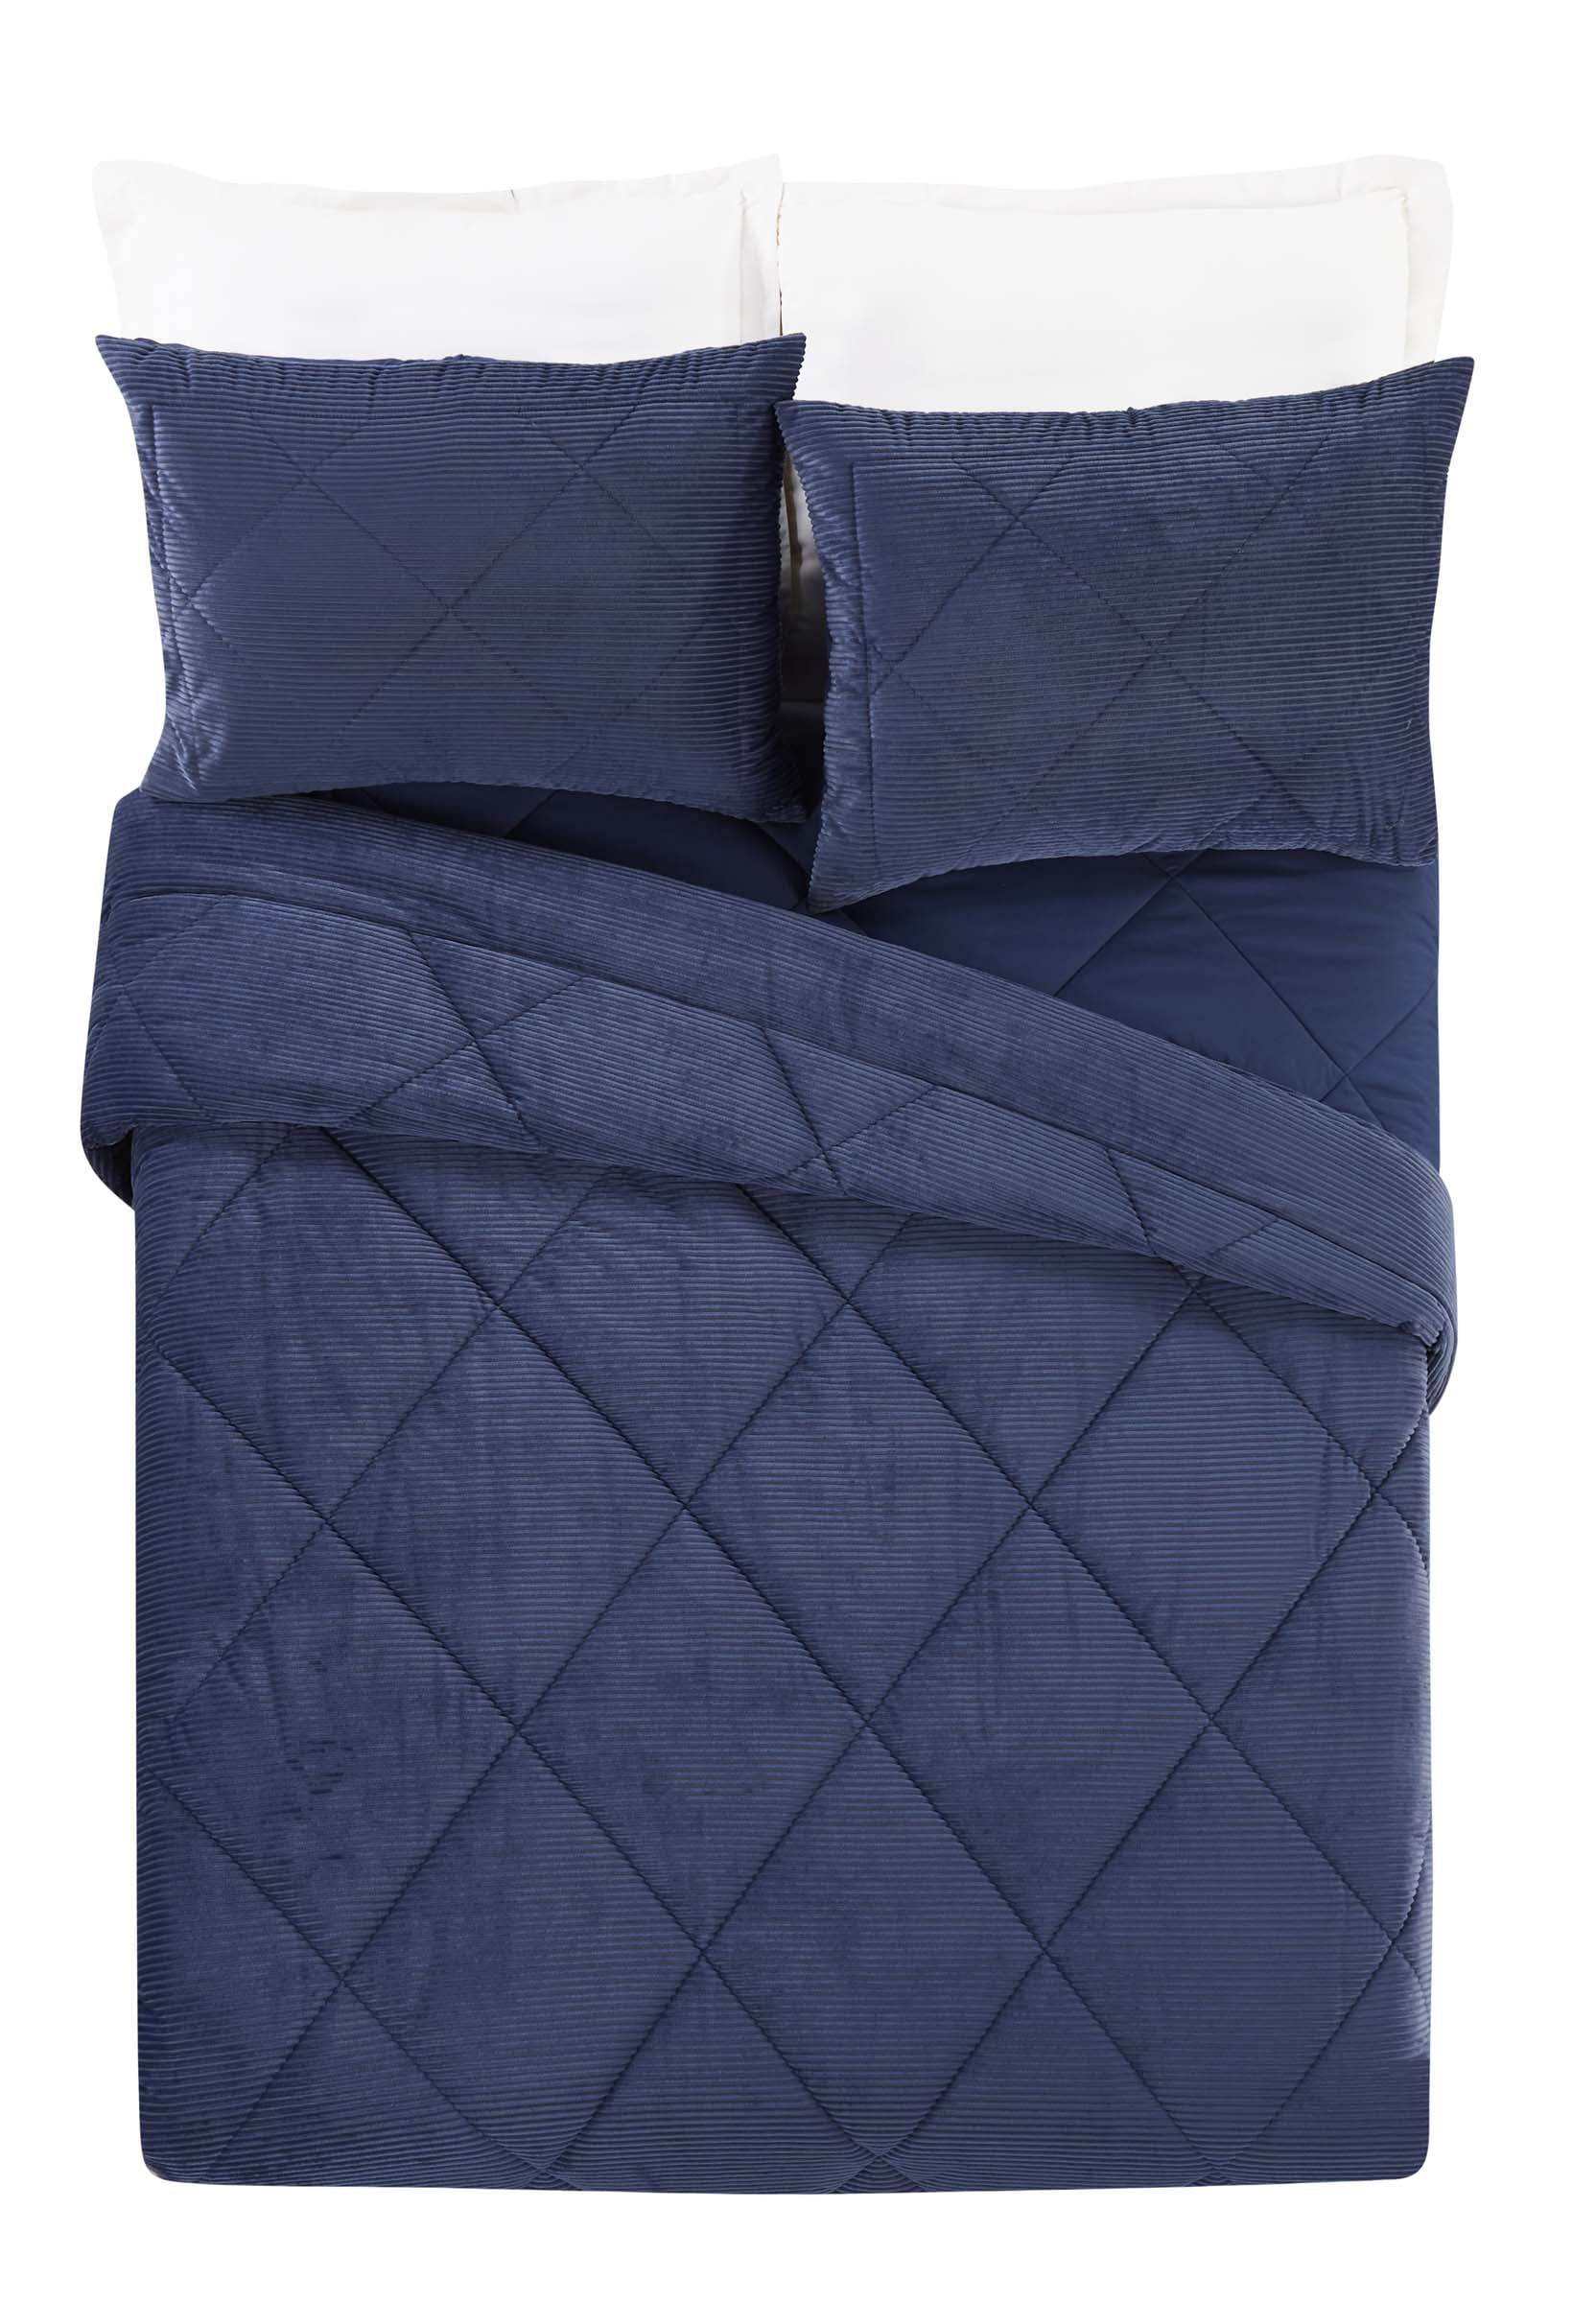 Better Homes & Gardens Plush Blue Corduroy Comforter Full/Queen 3-Piece Set